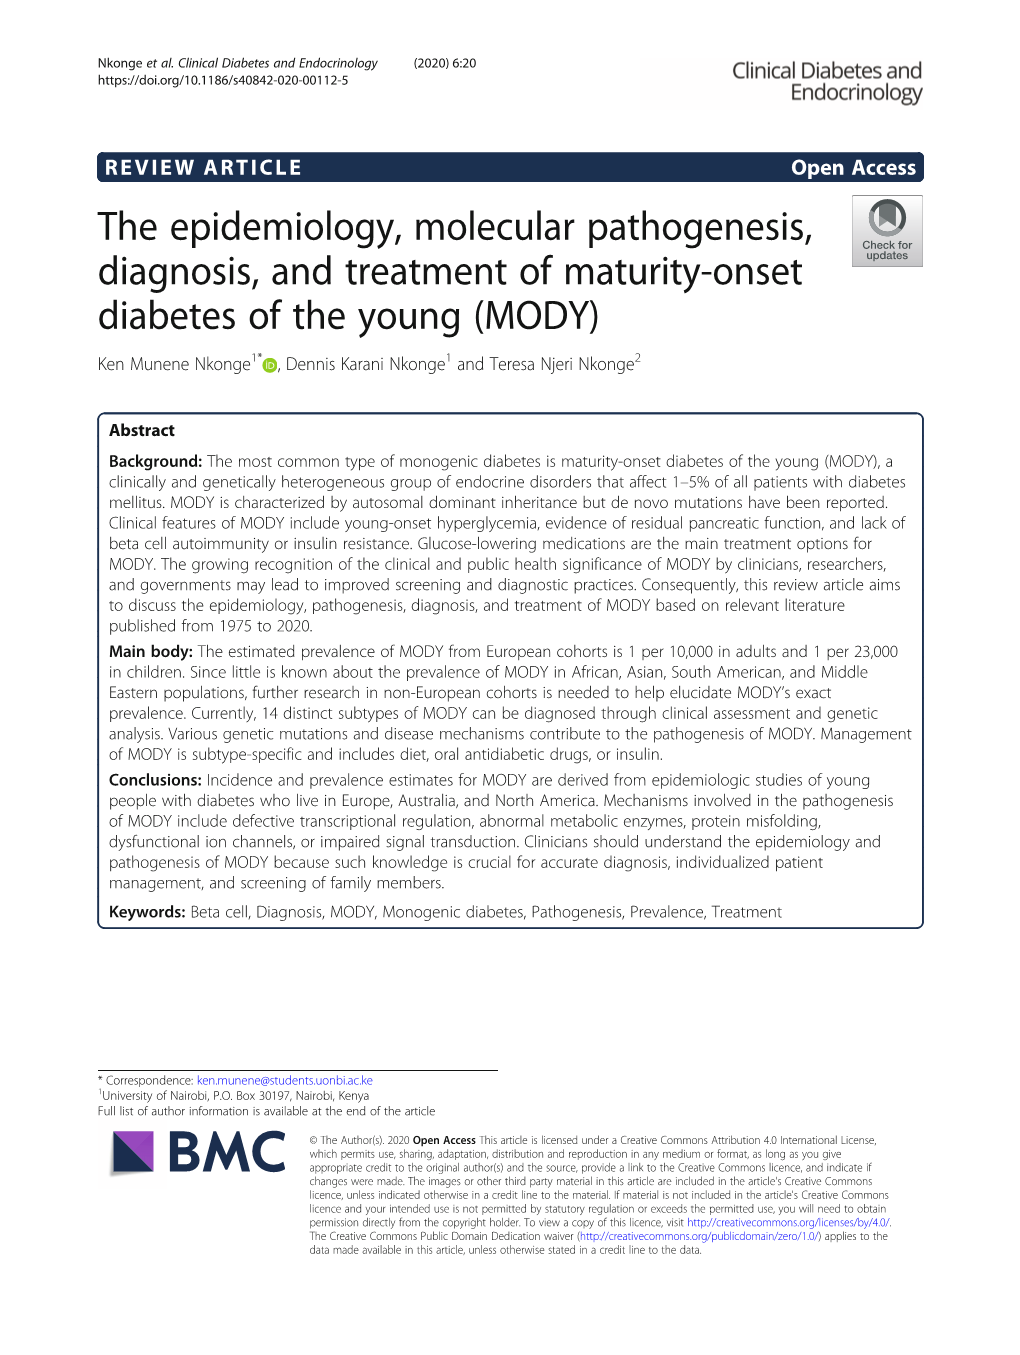 The Epidemiology, Molecular Pathogenesis, Diagnosis, And